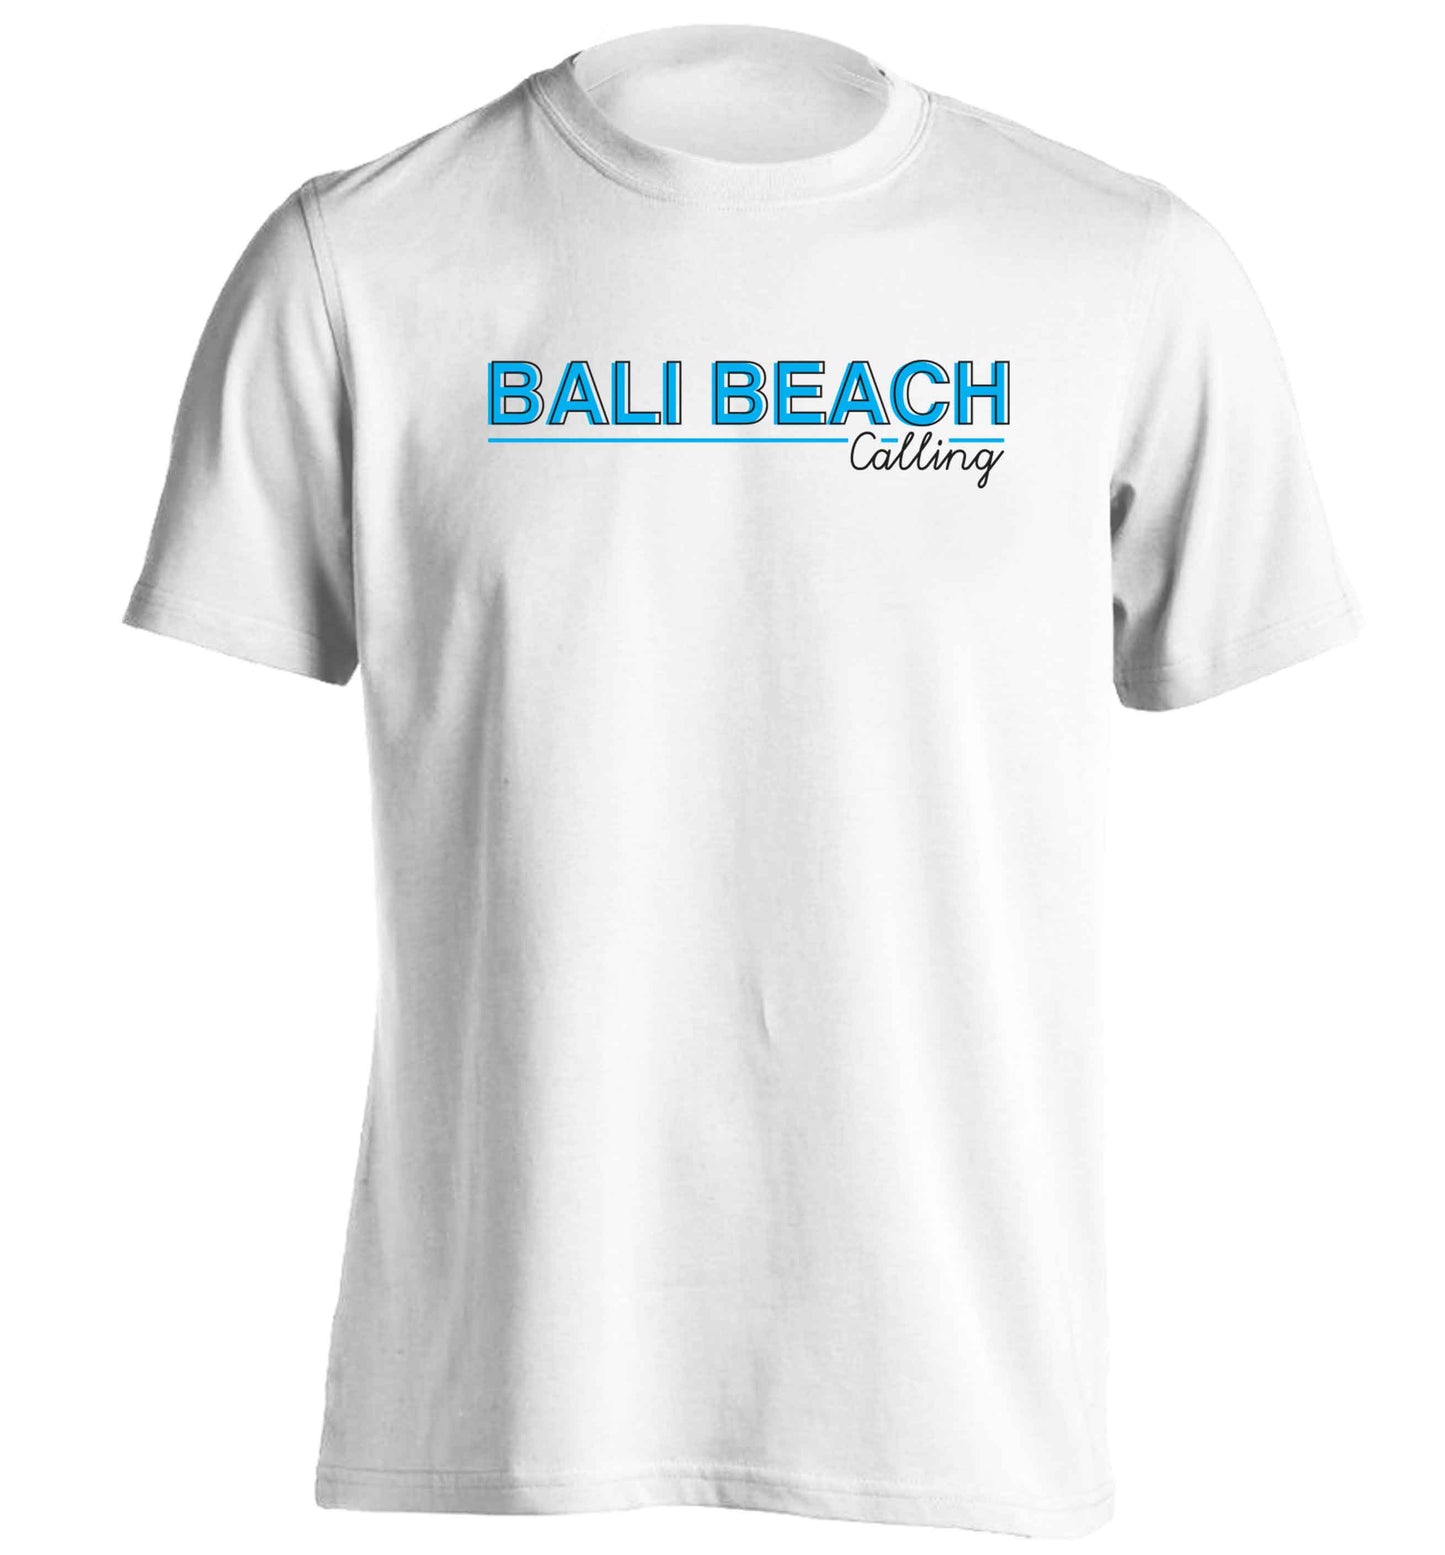 Bali beach calling adults unisex white Tshirt 2XL